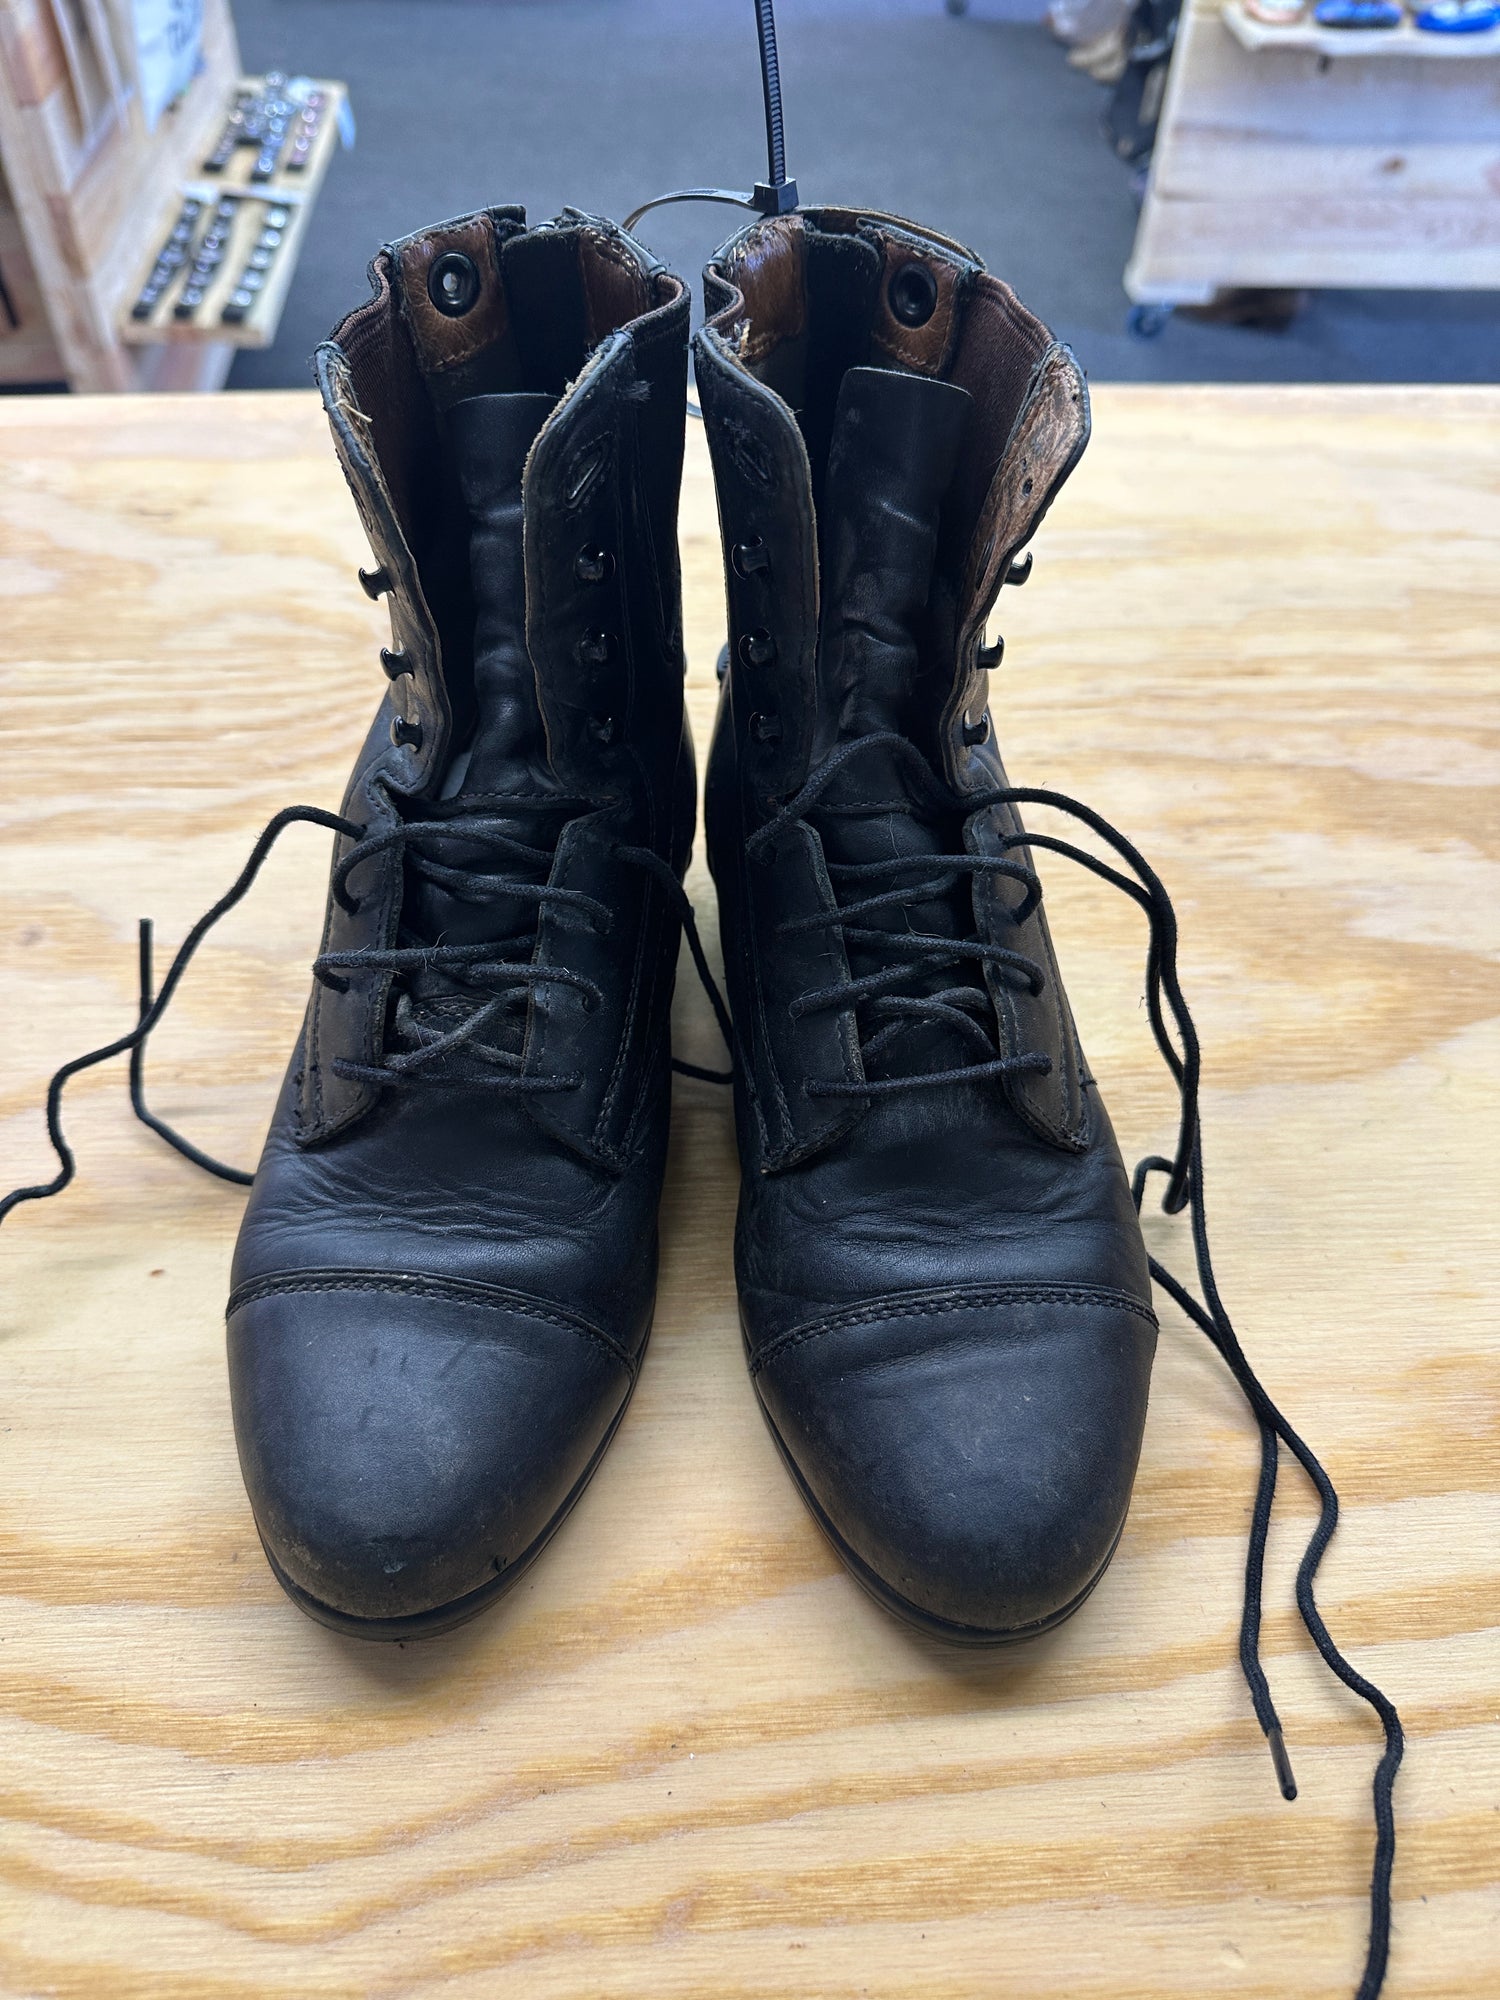 Women's Ariat Paddock Boots Size 7 Black Rear Zip